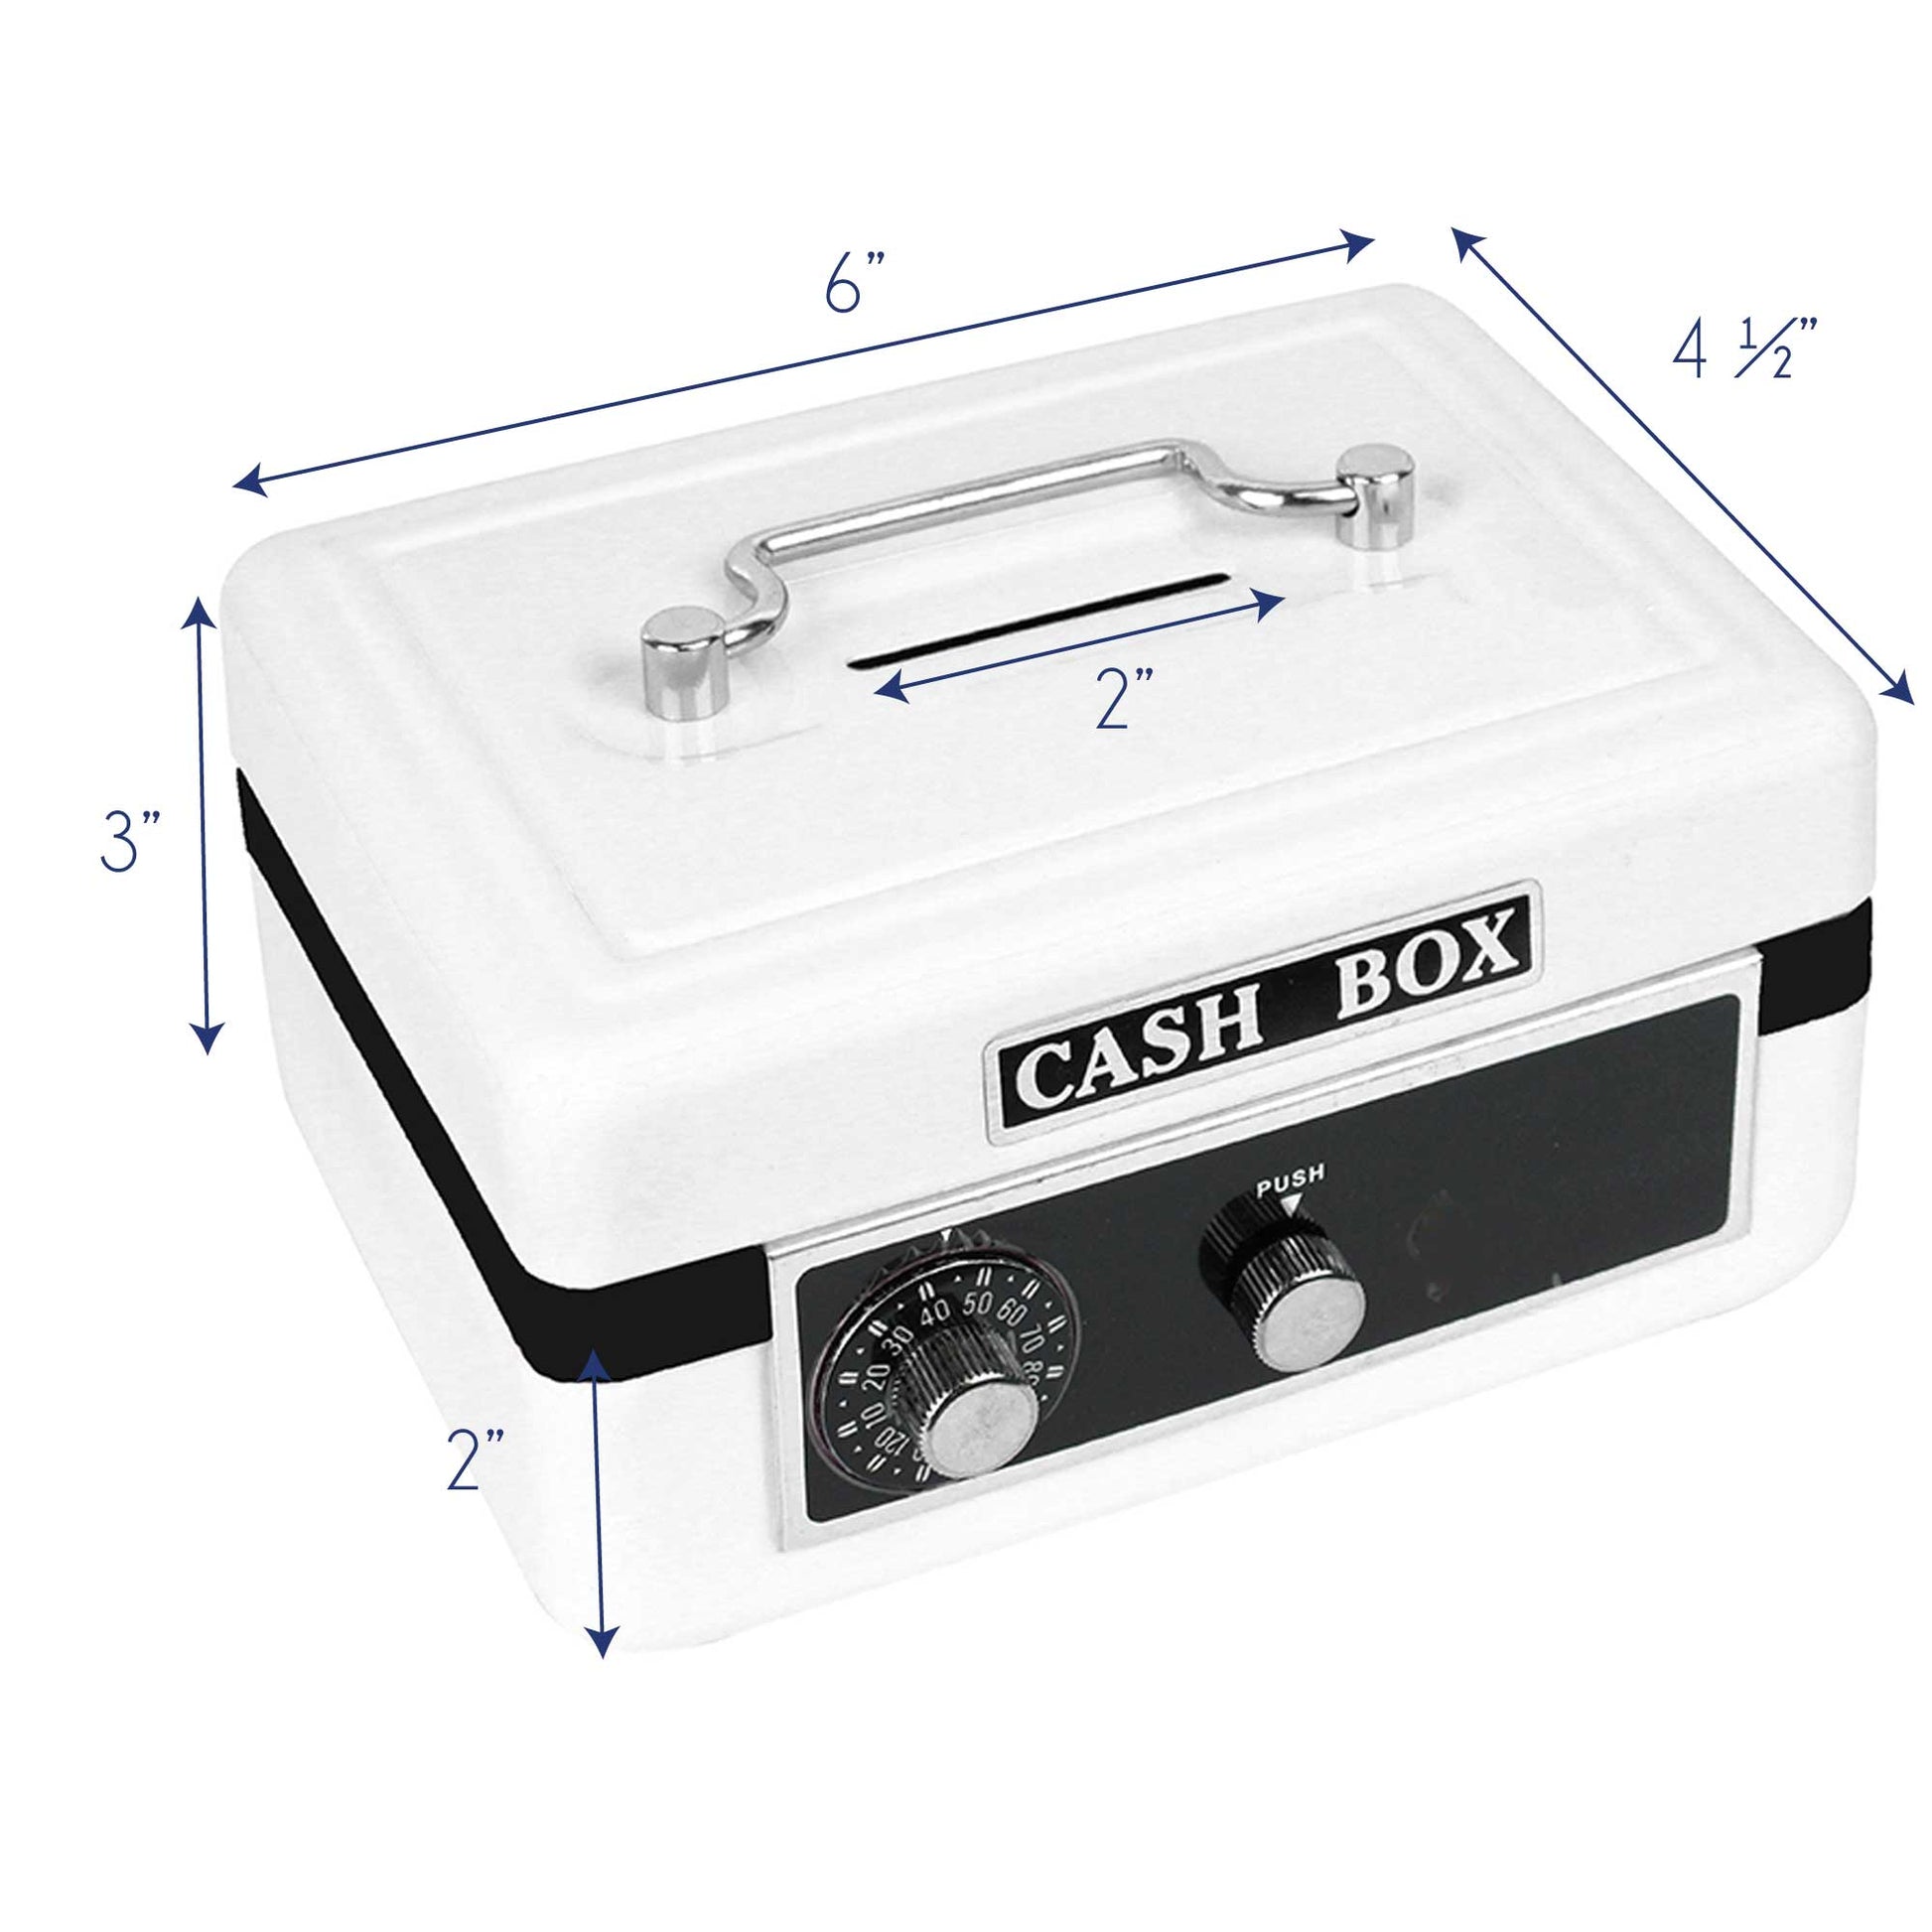 Personalized White Cash Box with Sports design